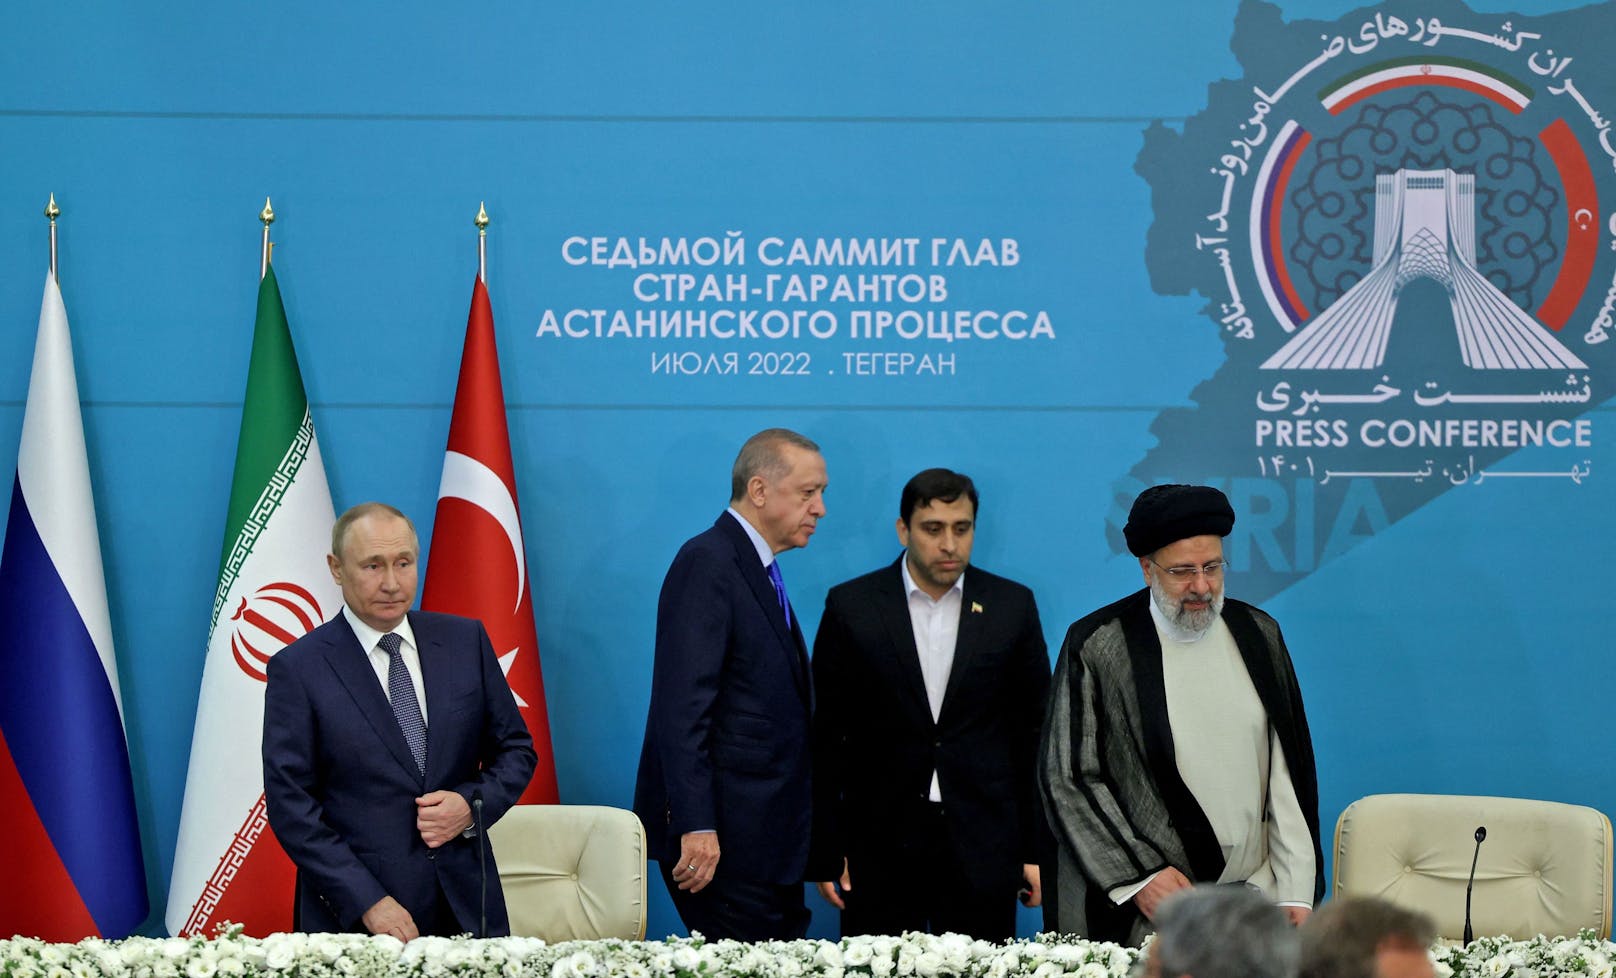 An diesem nahmen demzufolge Wladimir Putin (l.), Recep Tayyip Erdogan (2.v.l.) und Ebrahim Raisi (r.) teil.